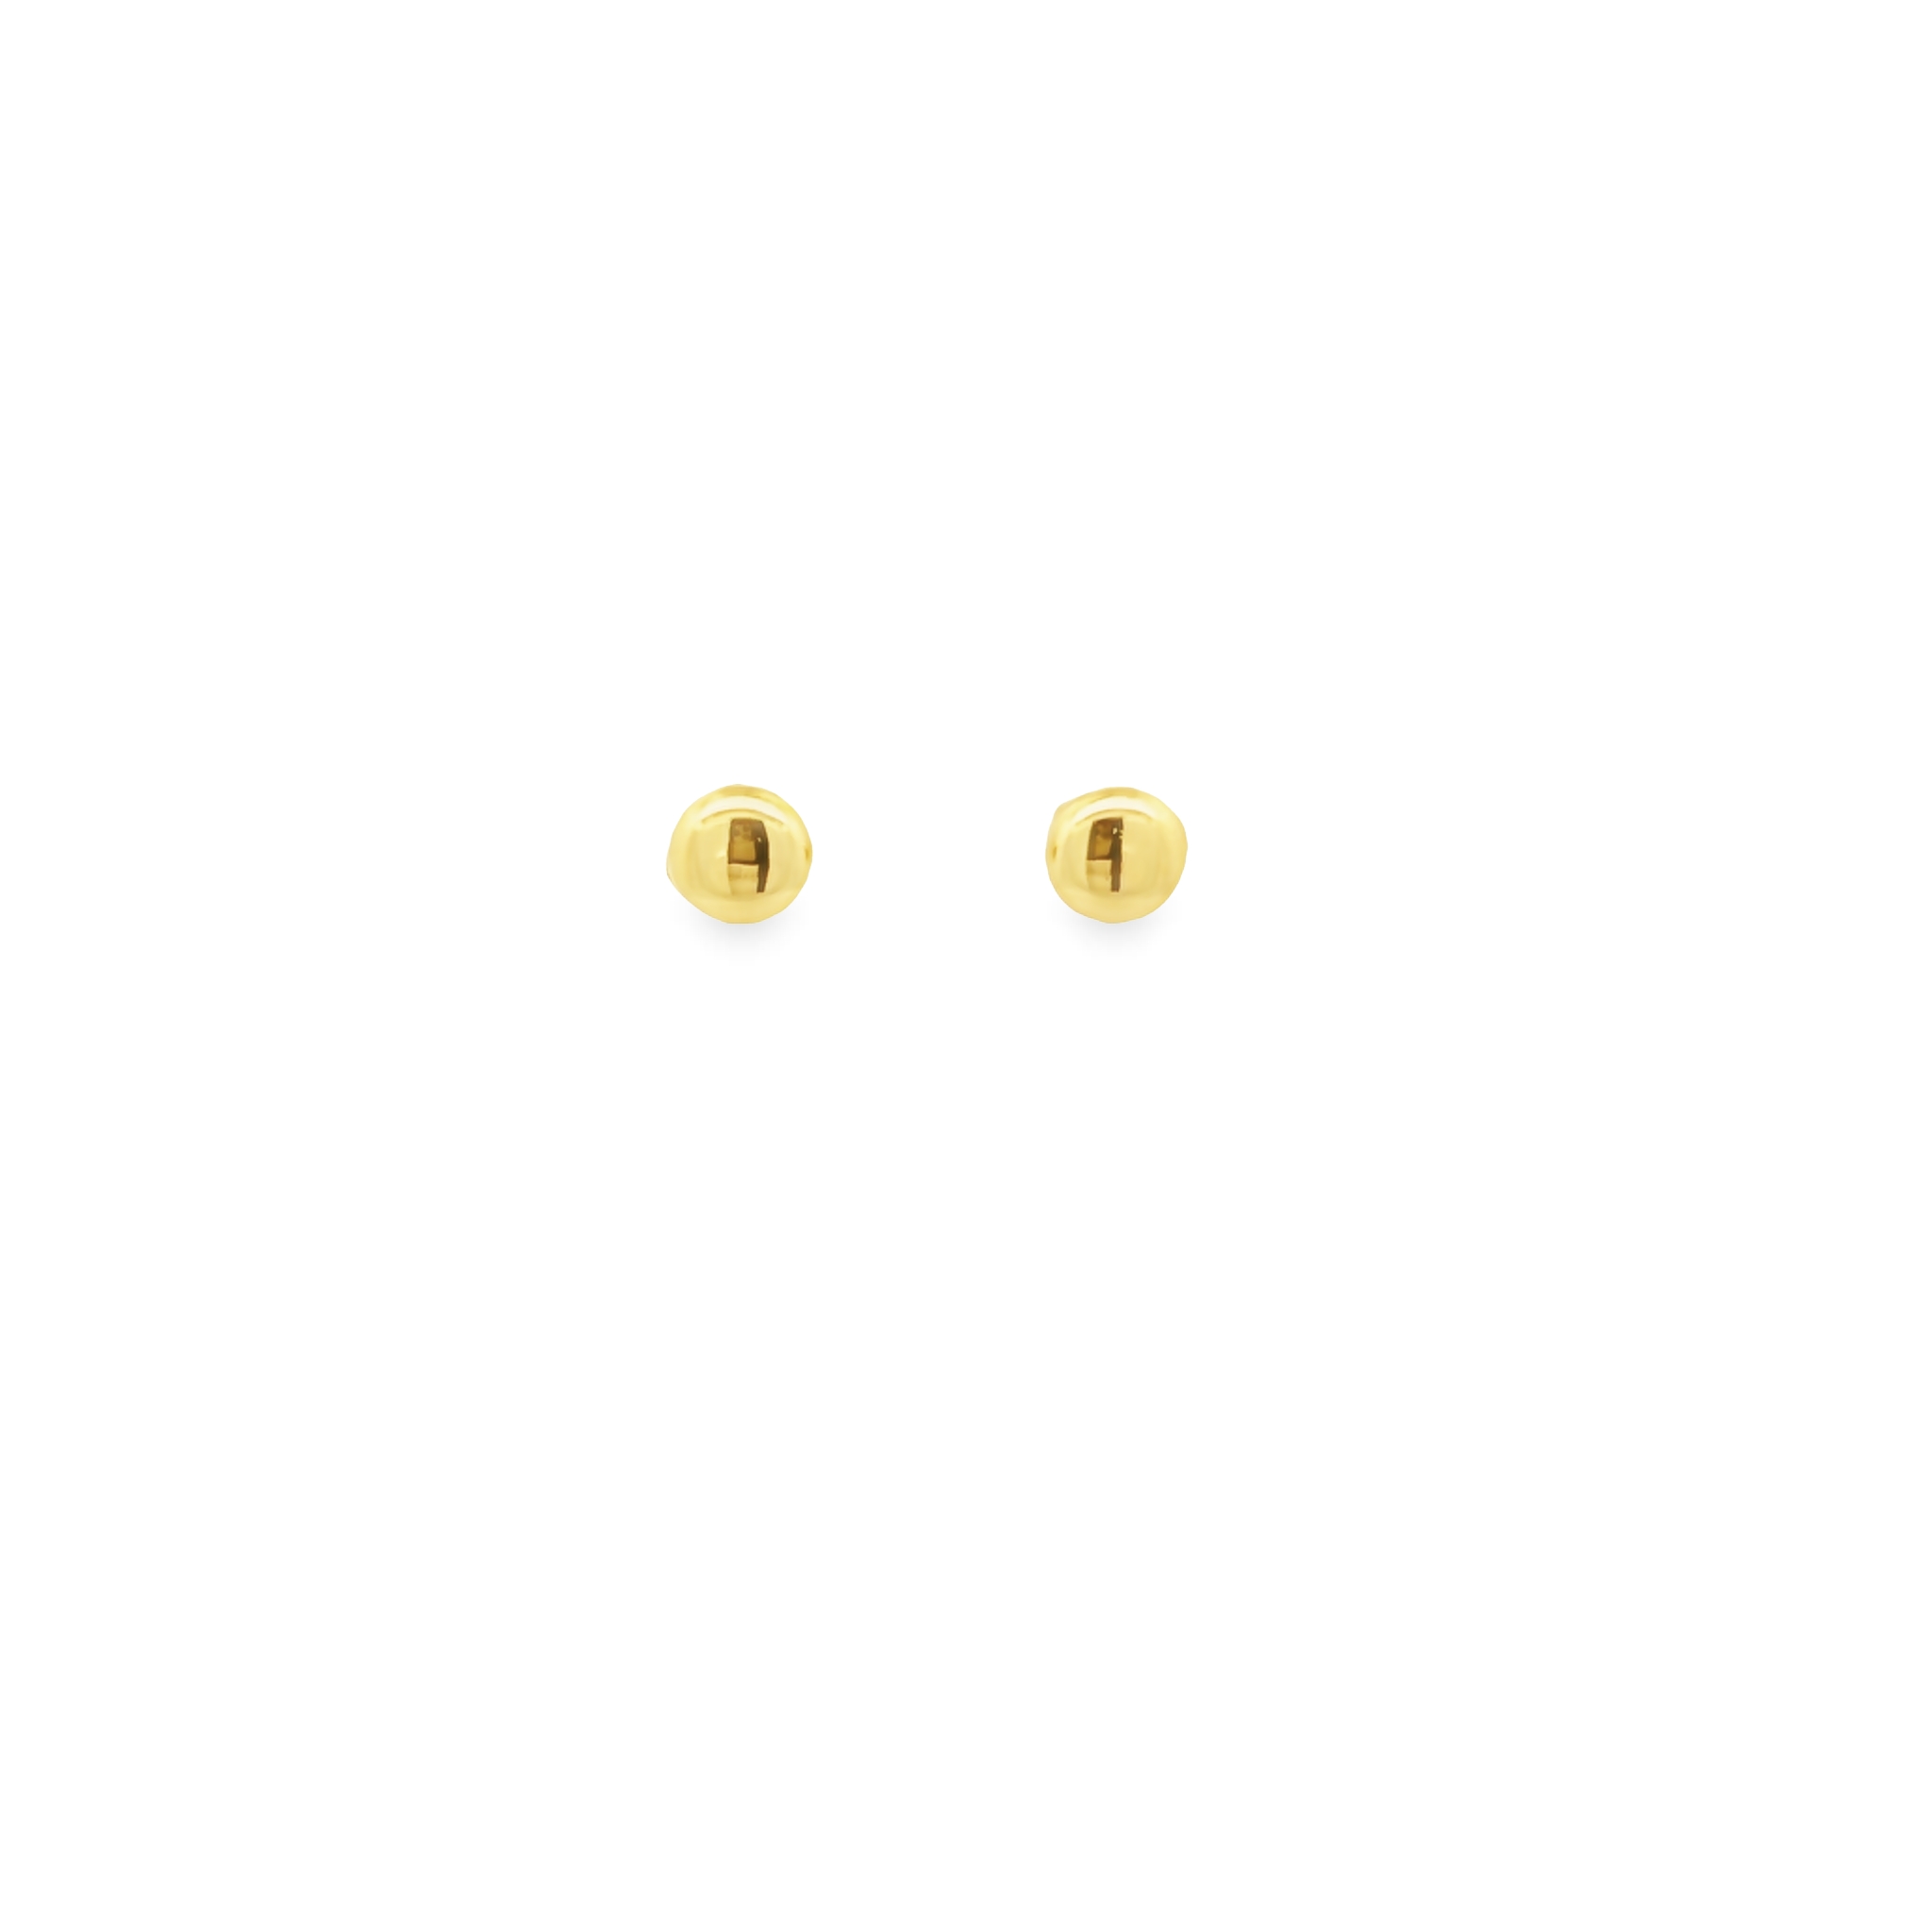 7mm 14k Yellow Gold Button Stud Earrings